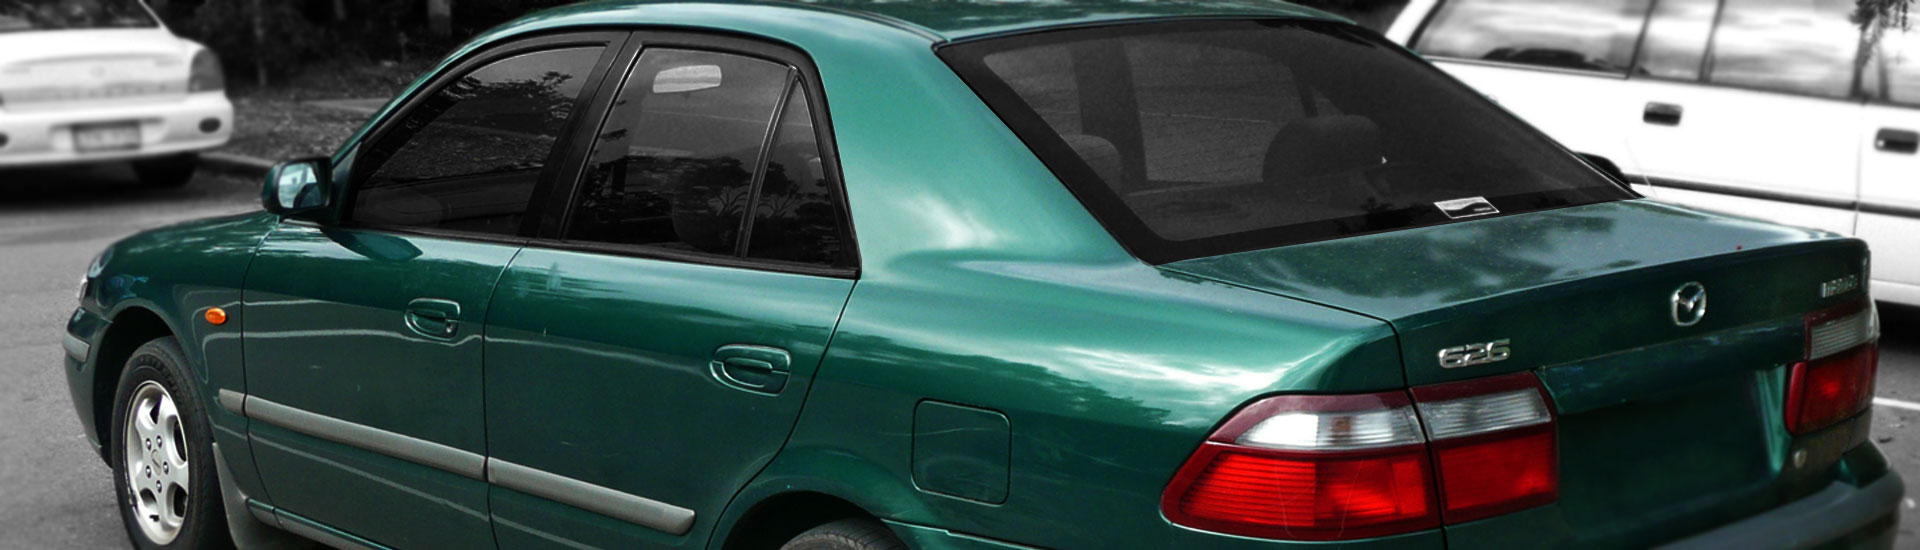 Mazda 626 Window Tint